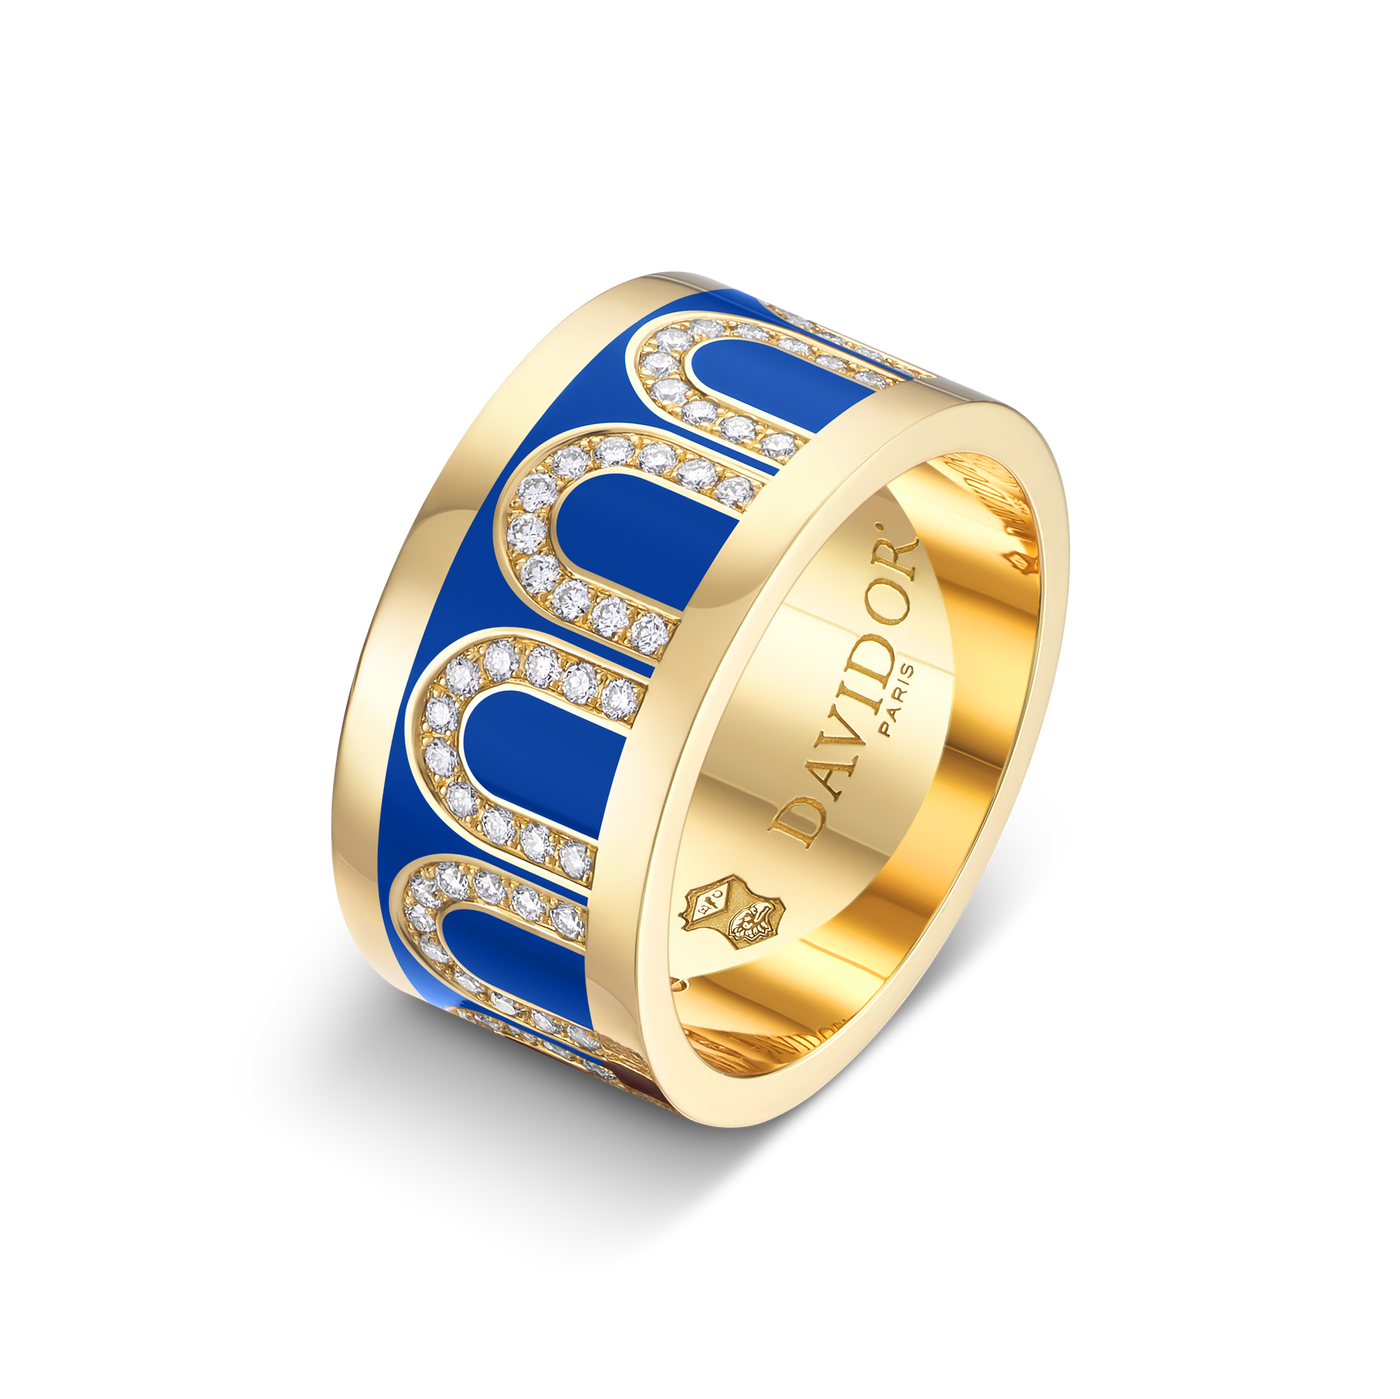 L'Arc de DAVIDOR Ring GM, 18k Yellow Gold with Riviera Lacquered Ceramic and Arcade Diamonds - DAVIDOR